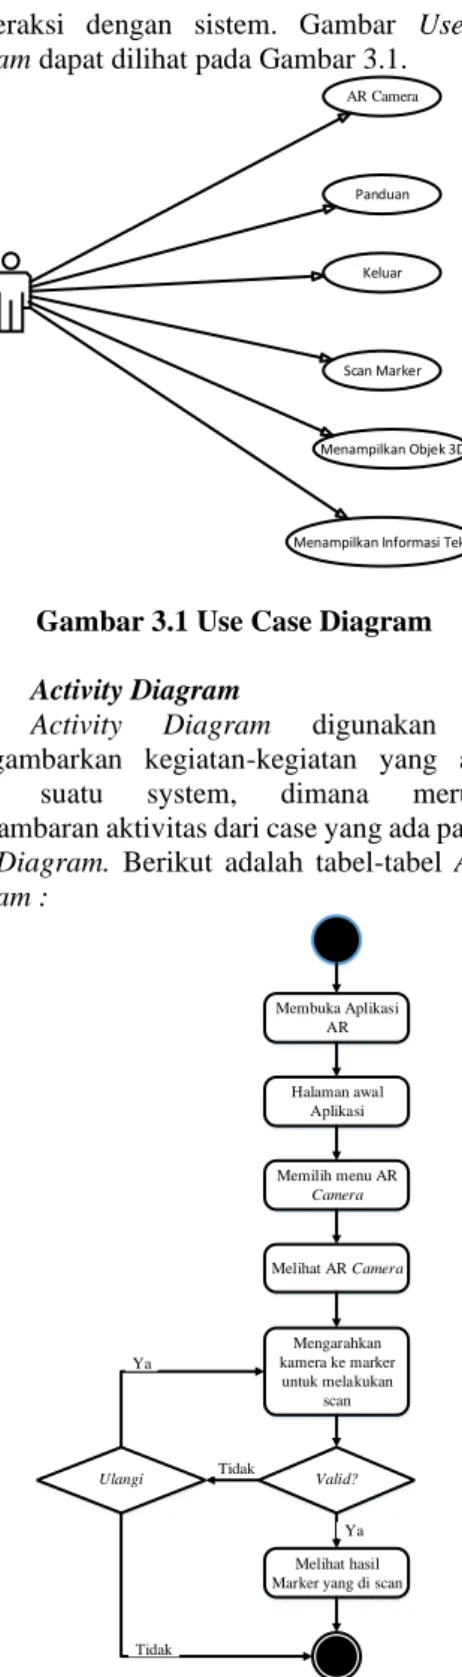 Gambar 3.1 Use Case Diagram 